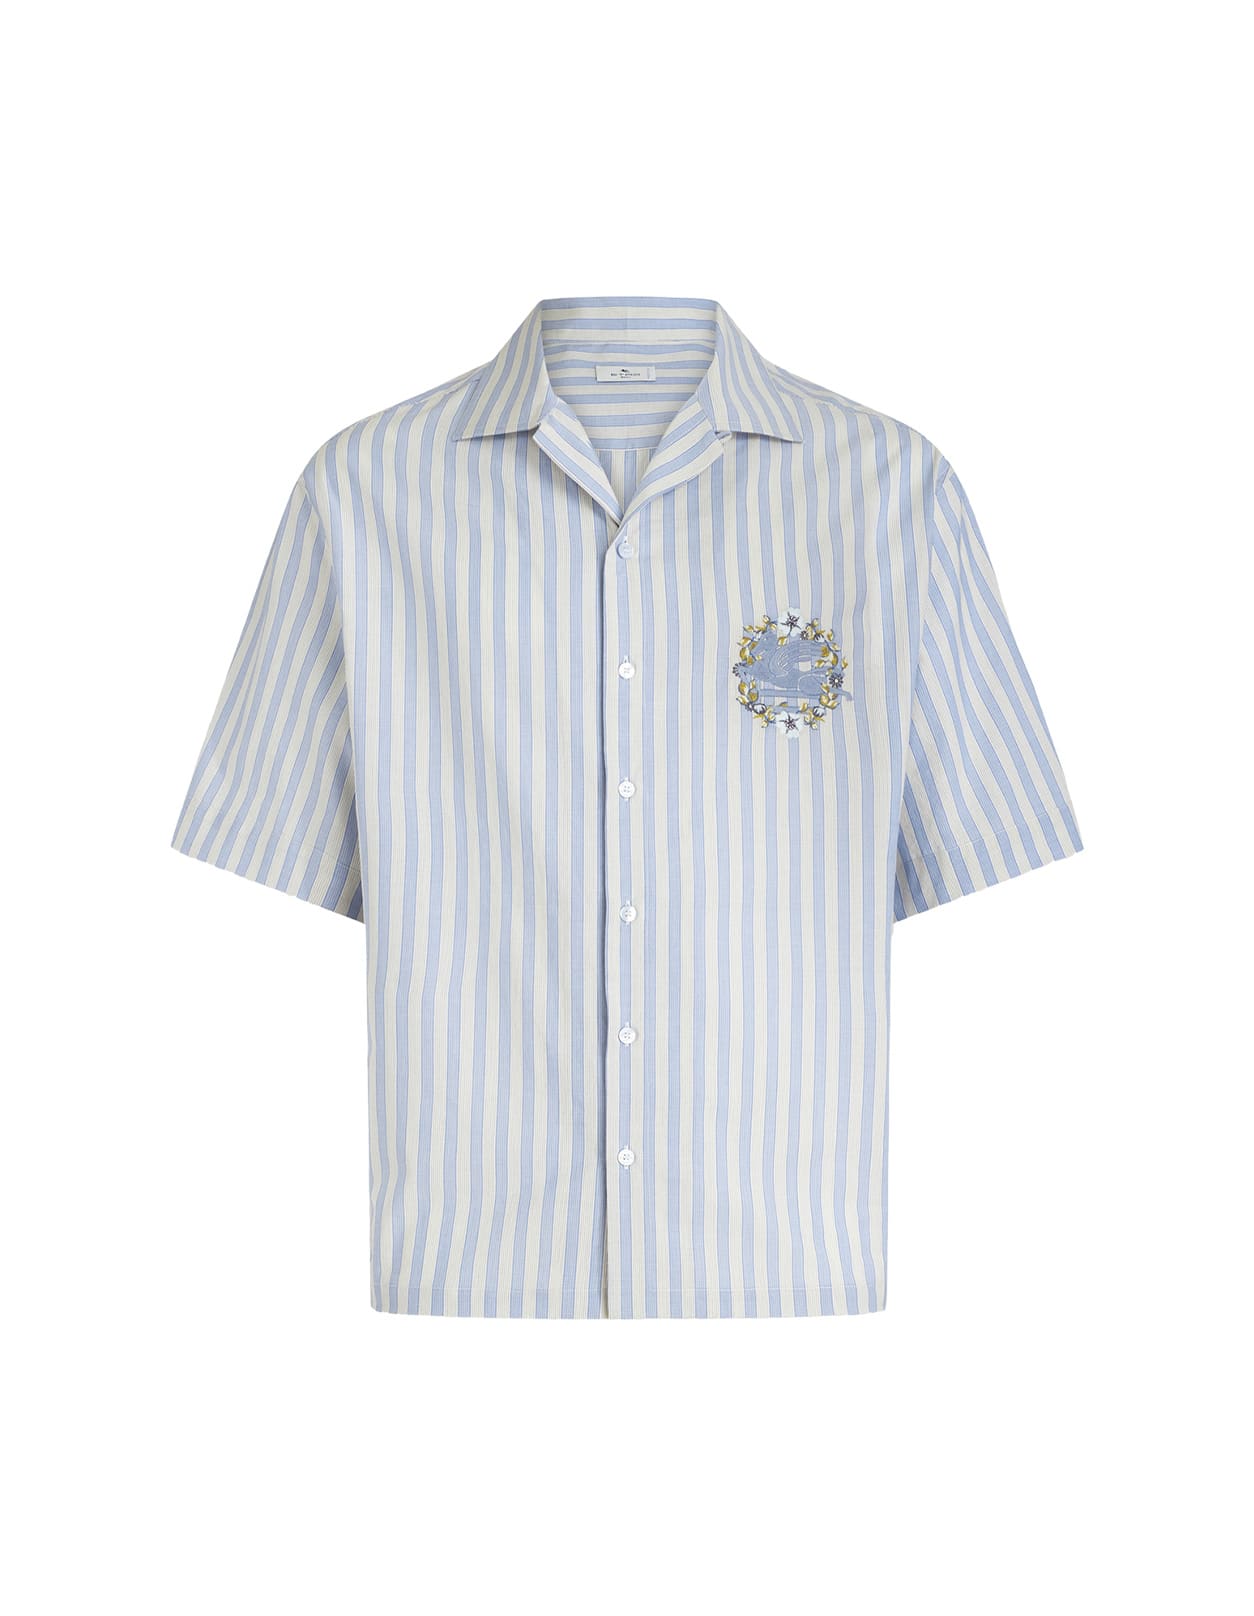 Shop Etro Light Blue And White Striped Bowling Shirt